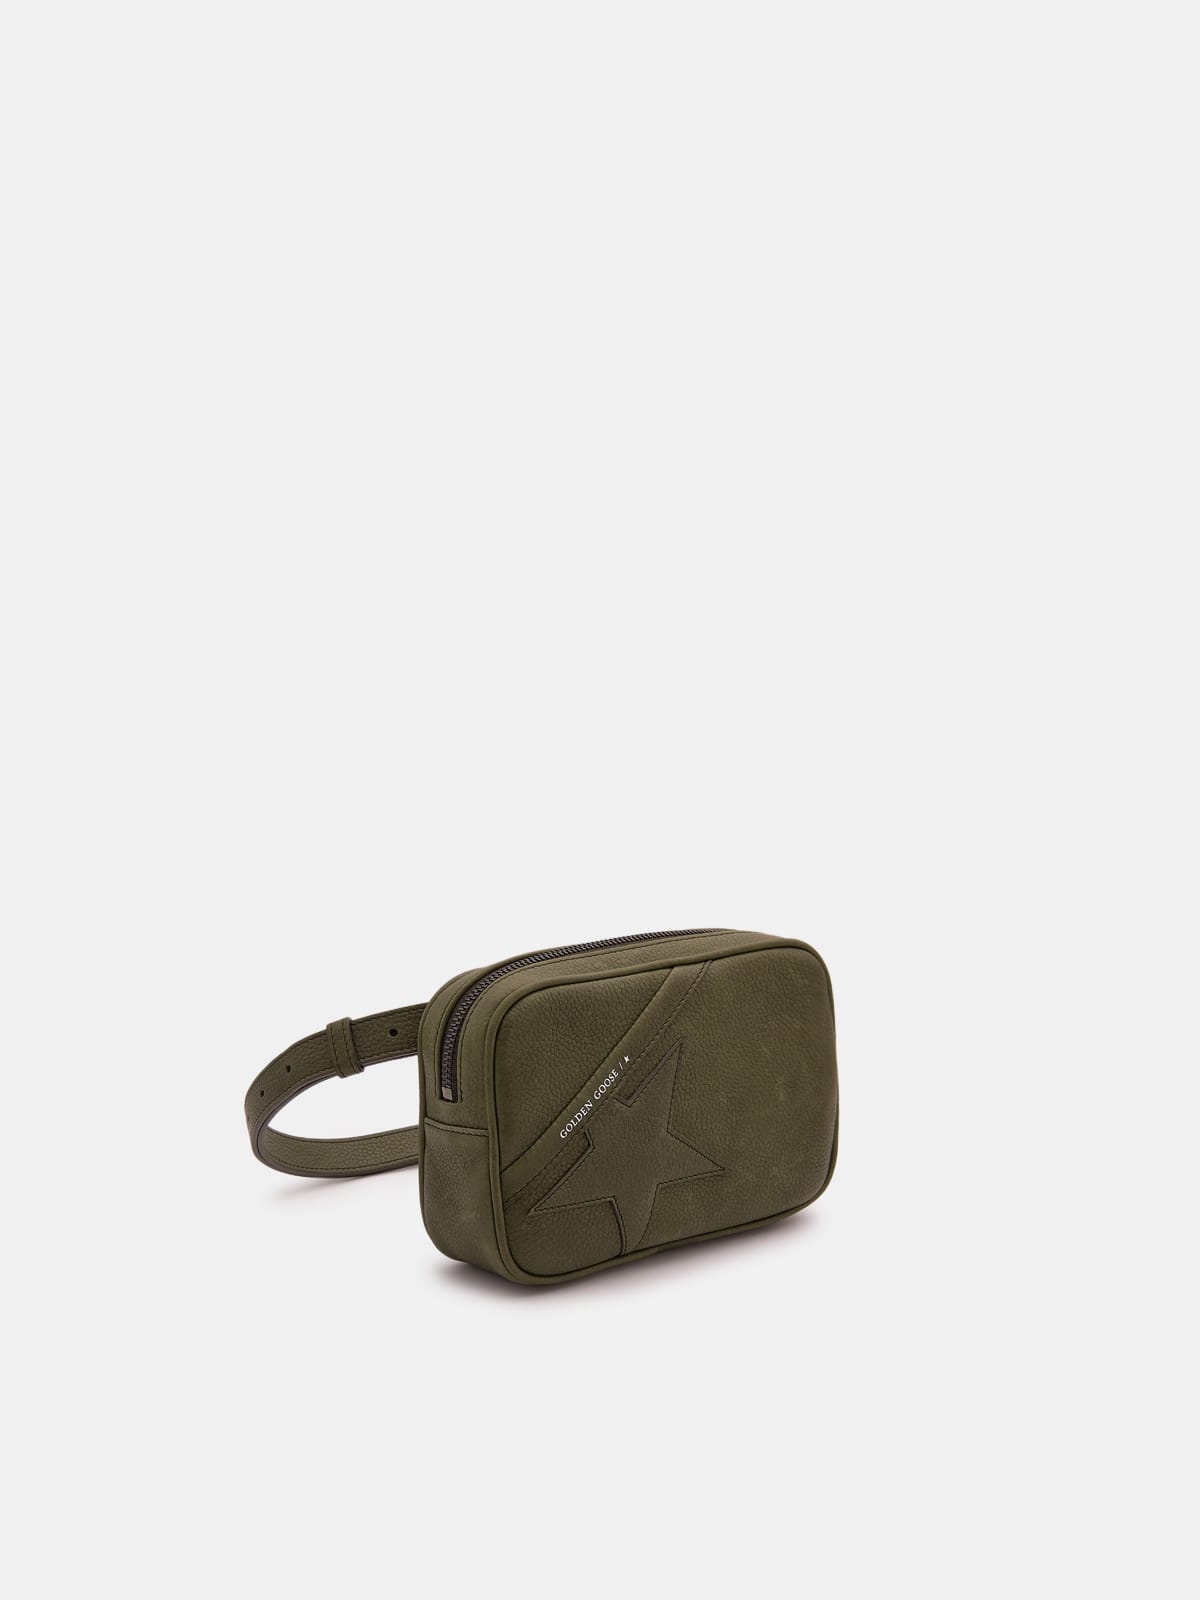 Golden Goose - Bolso Star Belt Bag verde militar de piel martillada in 